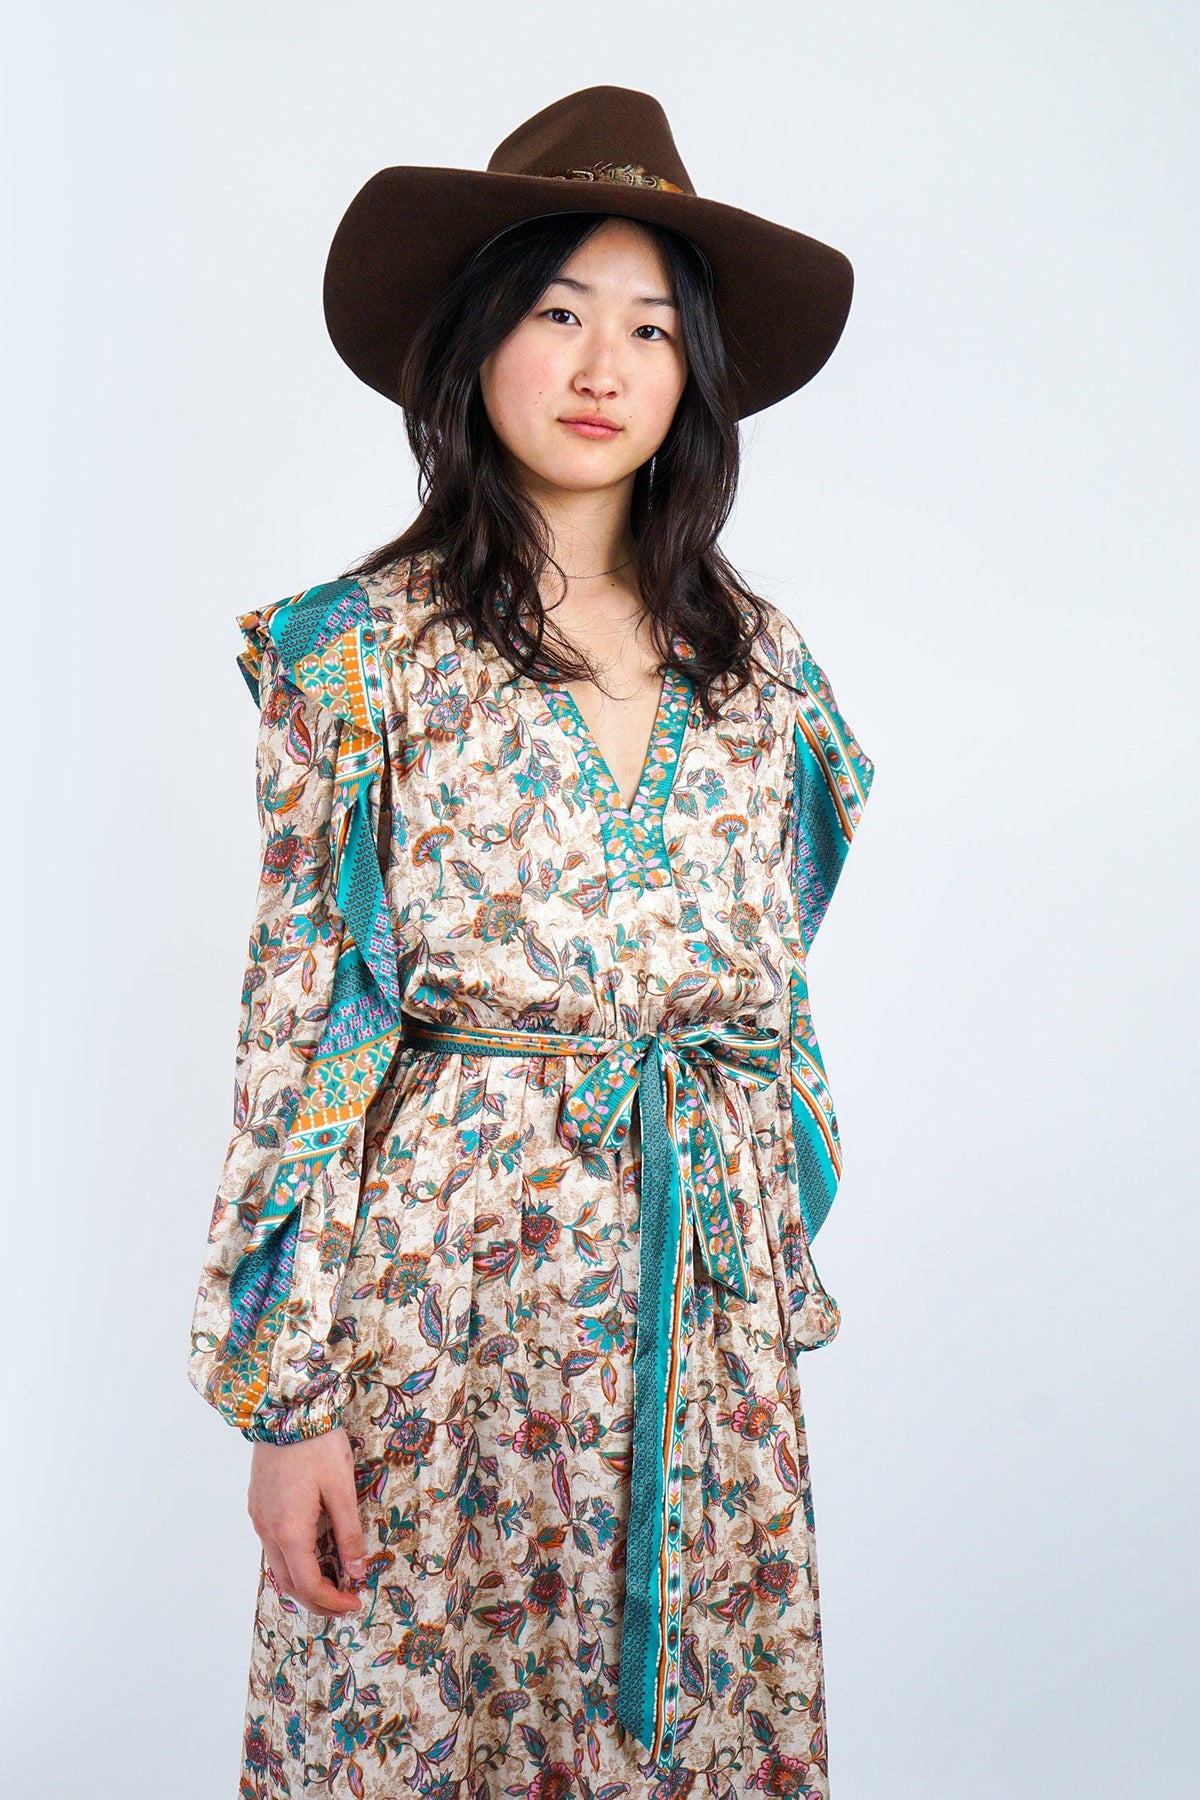 DCD DRESSES Tan and Teal Print Maxi Dress